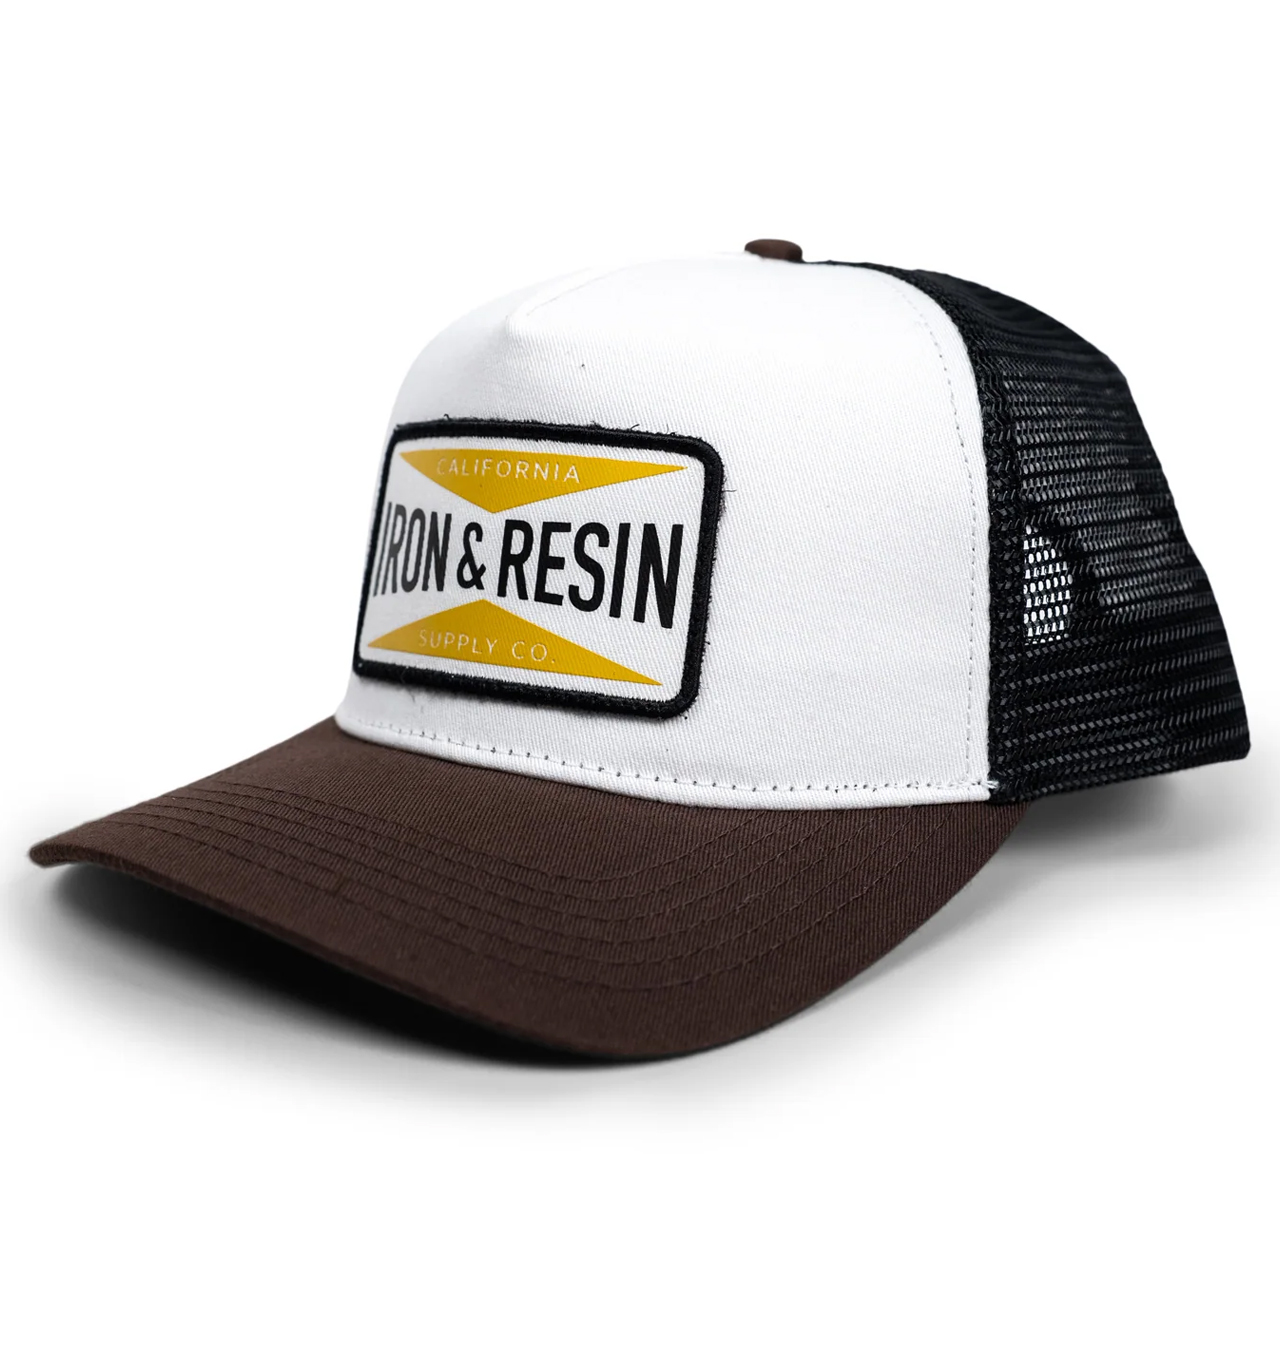 Iron & Resin - California Supply Hat - Brown